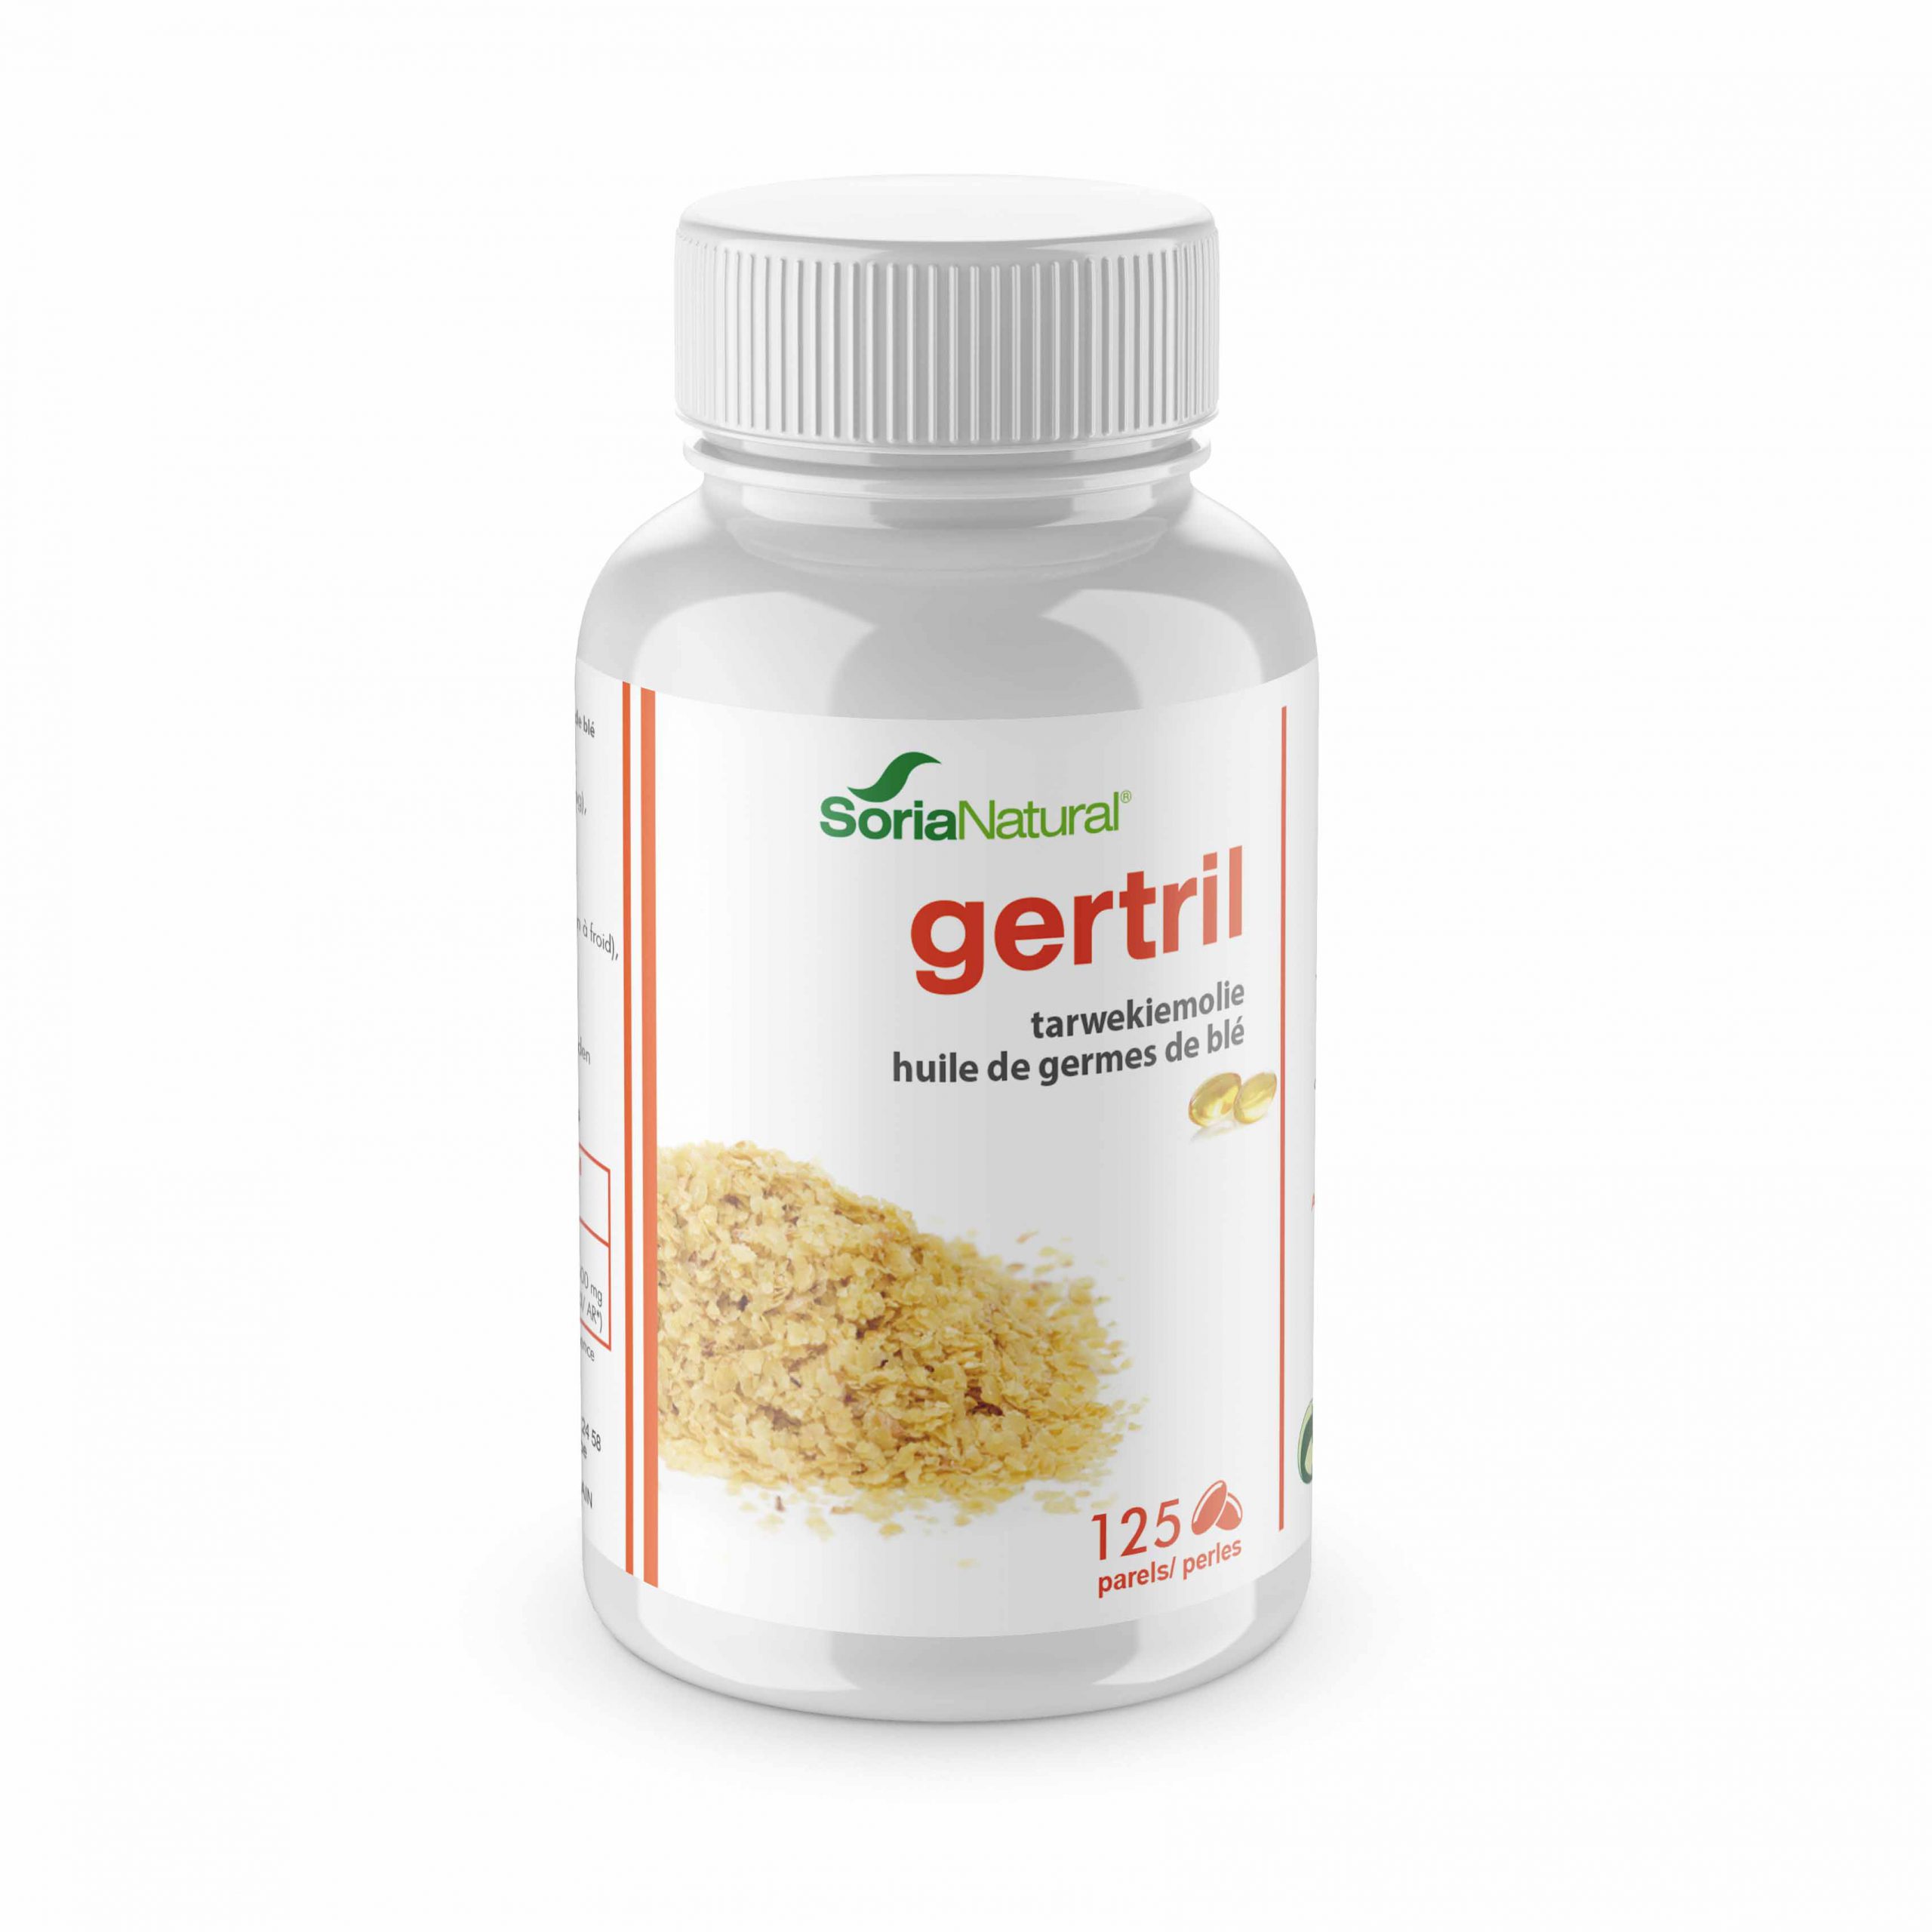 Gertril – tarwekiemolie